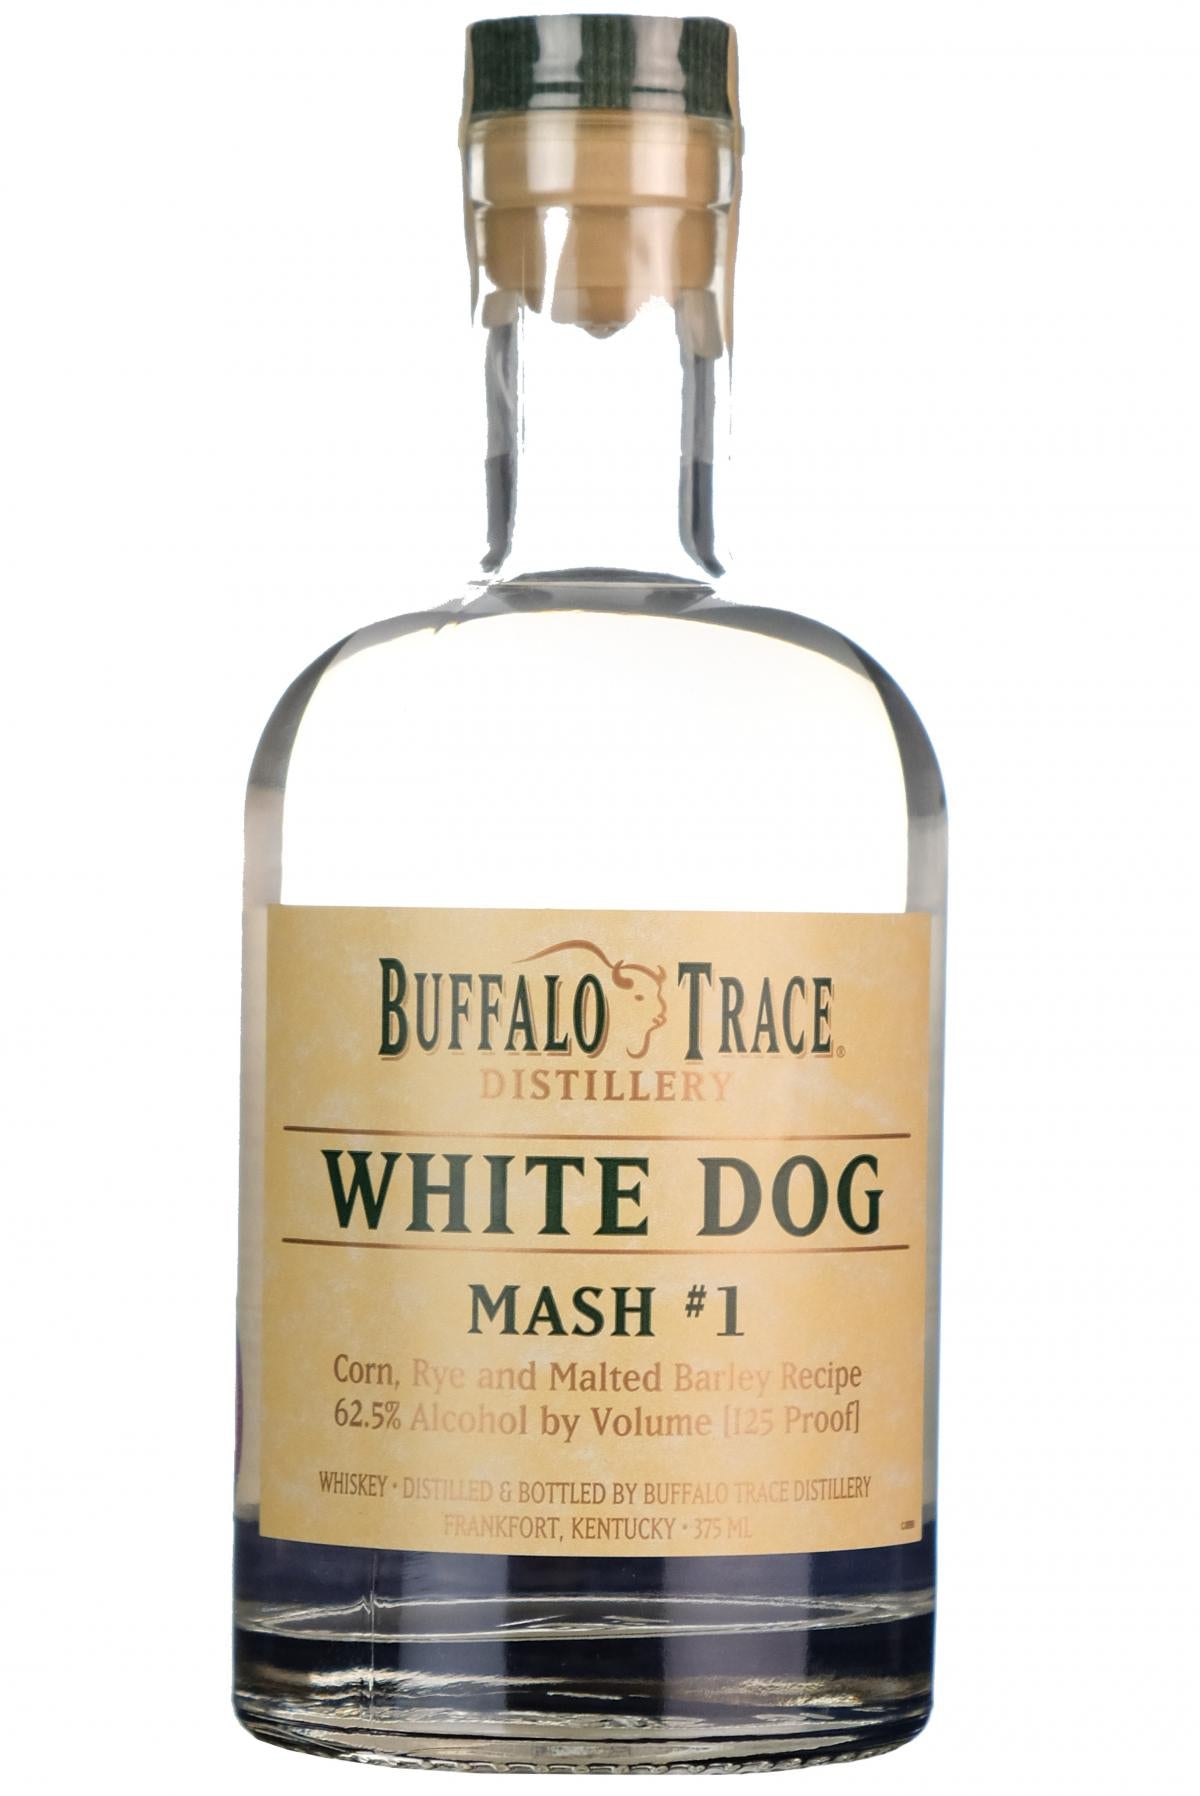 buffalo trace white dog mash #1 kentucky straight bourbon whiskey whisky america